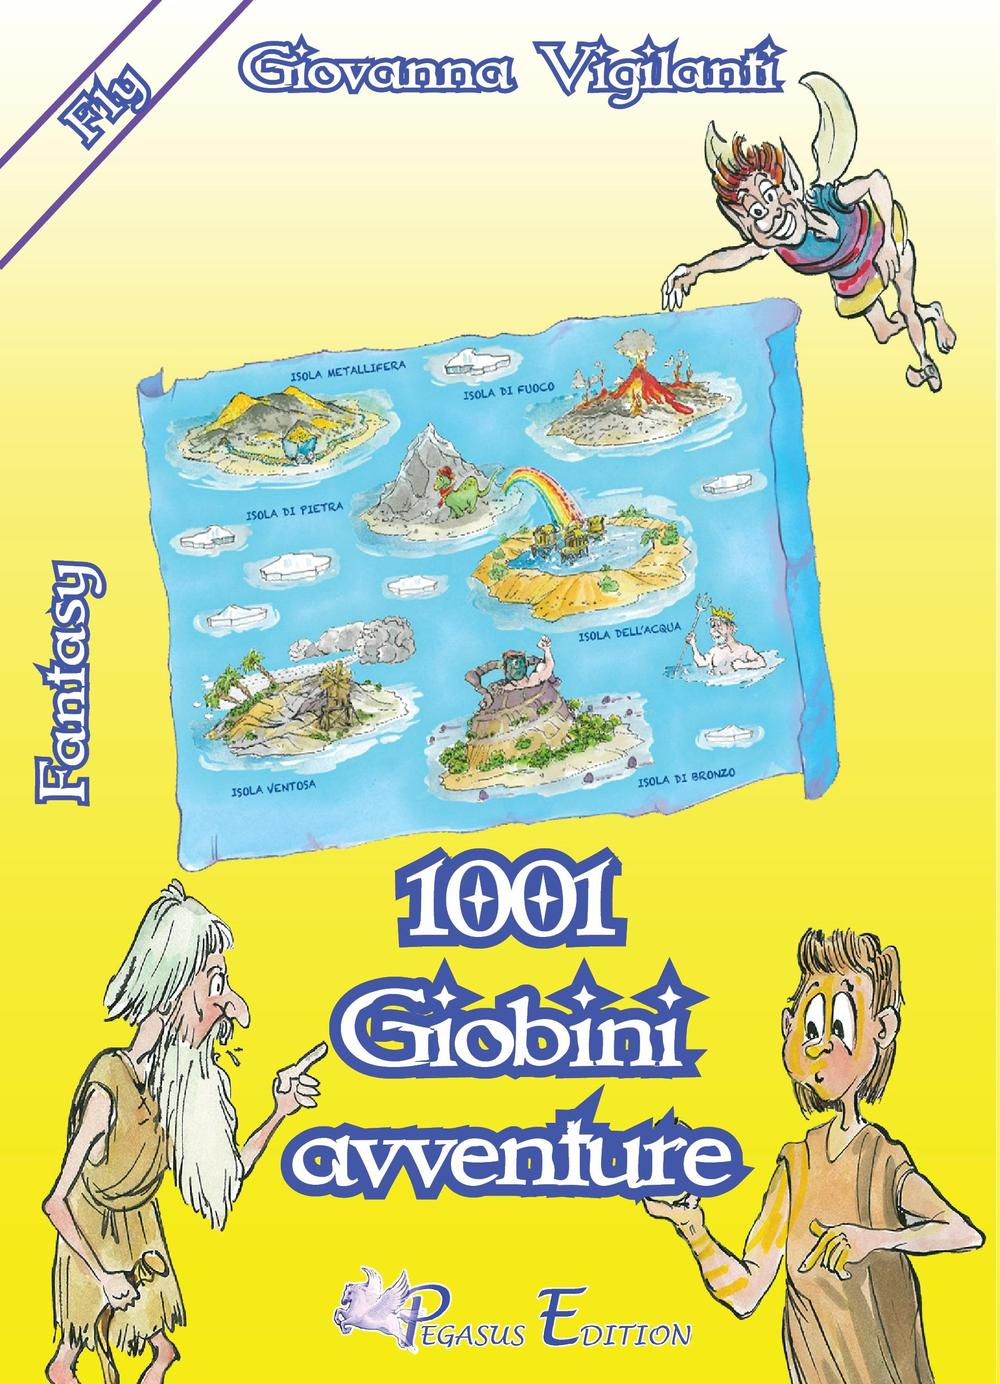 Image of 1001 giobini avventure